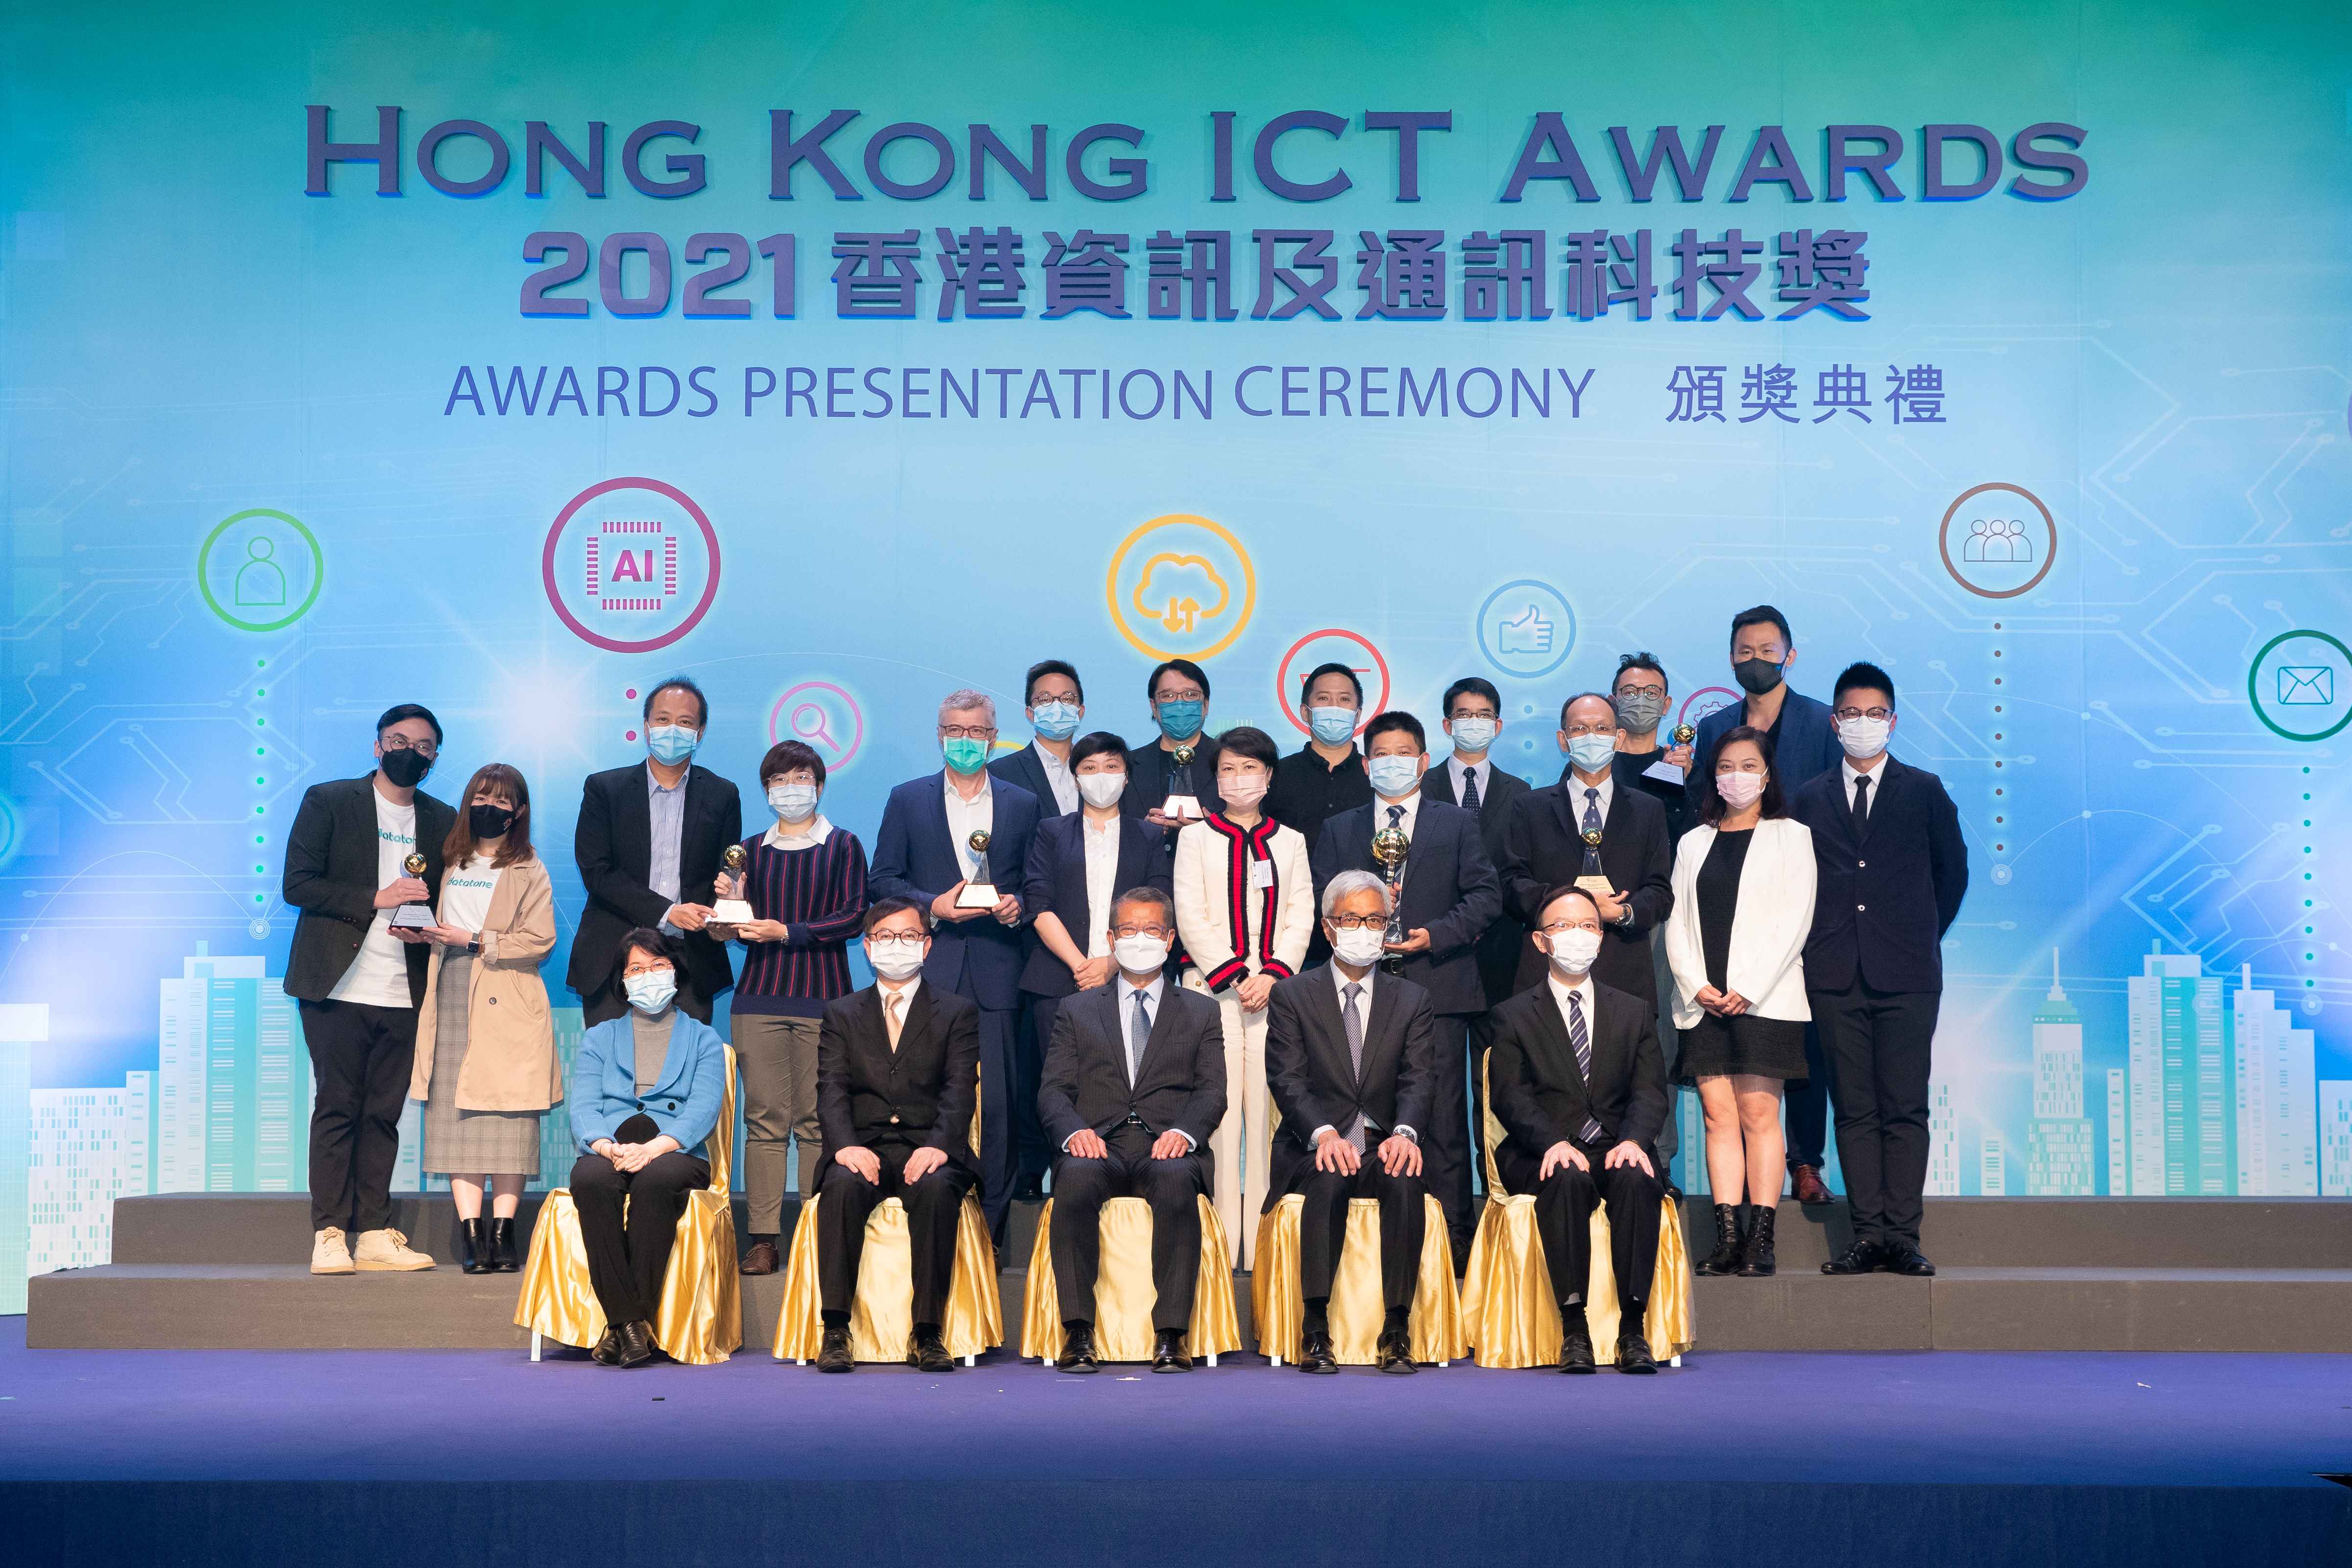 Hong Kong ICT Awards 2021 Smart Mobility Award Winners Group Photo